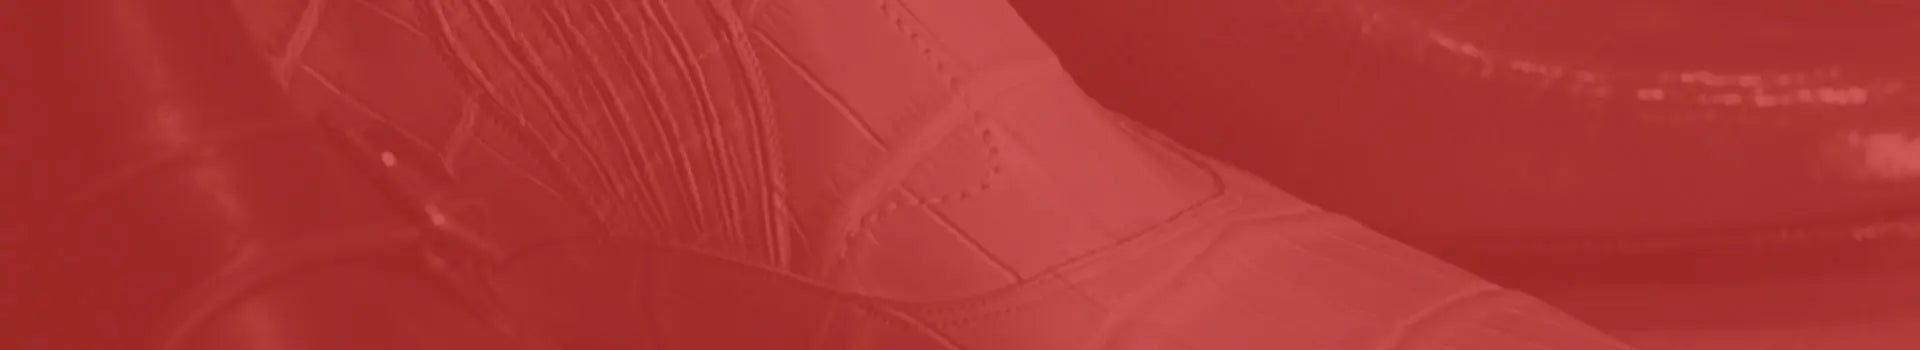 Men's Red Sneakers - DapperFam.com